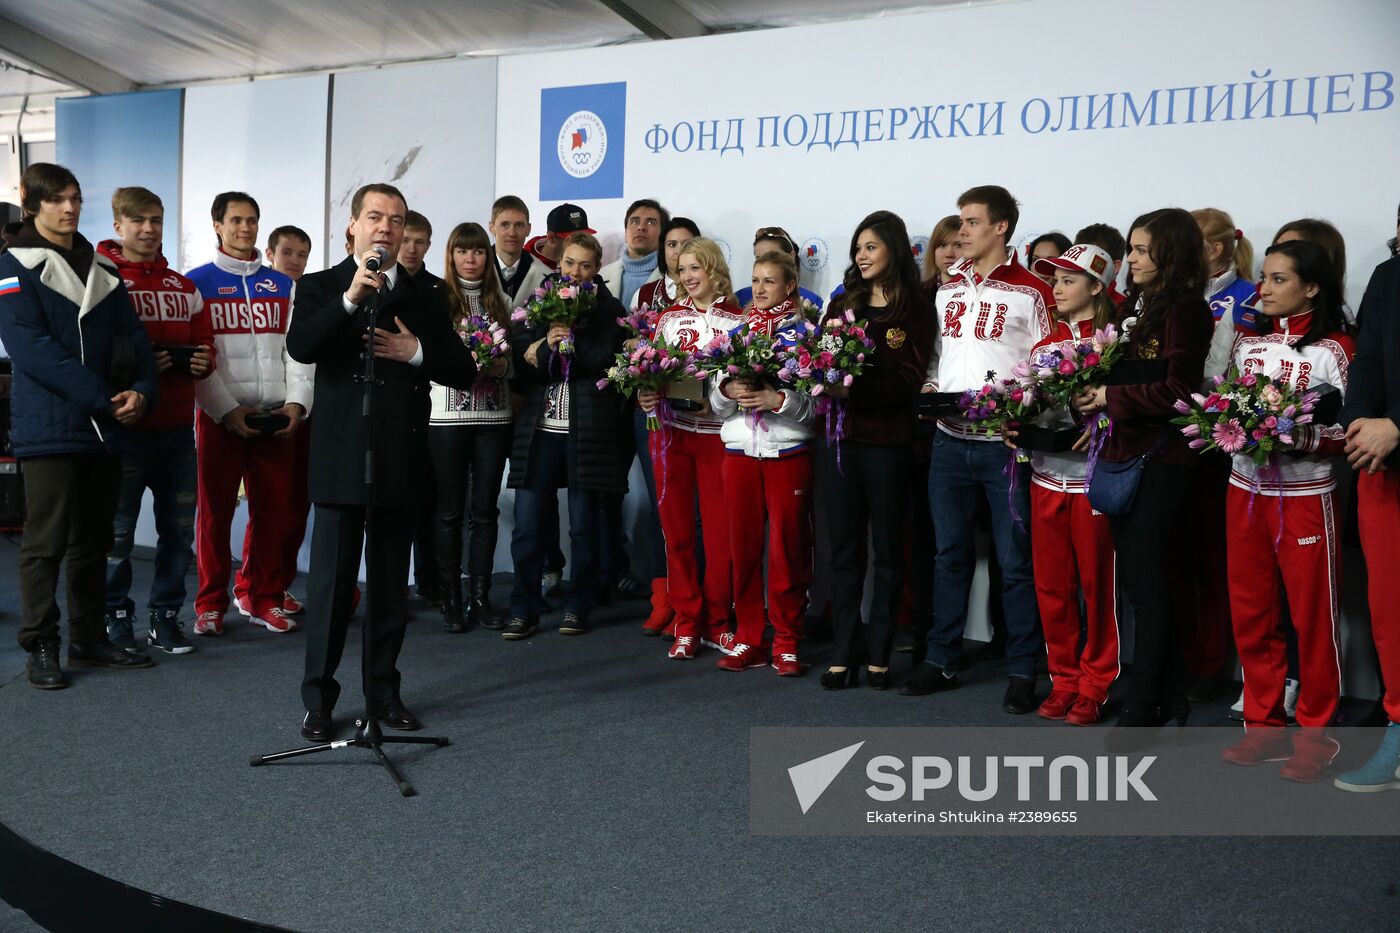 Dmitry Medvedev congratulates Sochi Olympic prize-winners